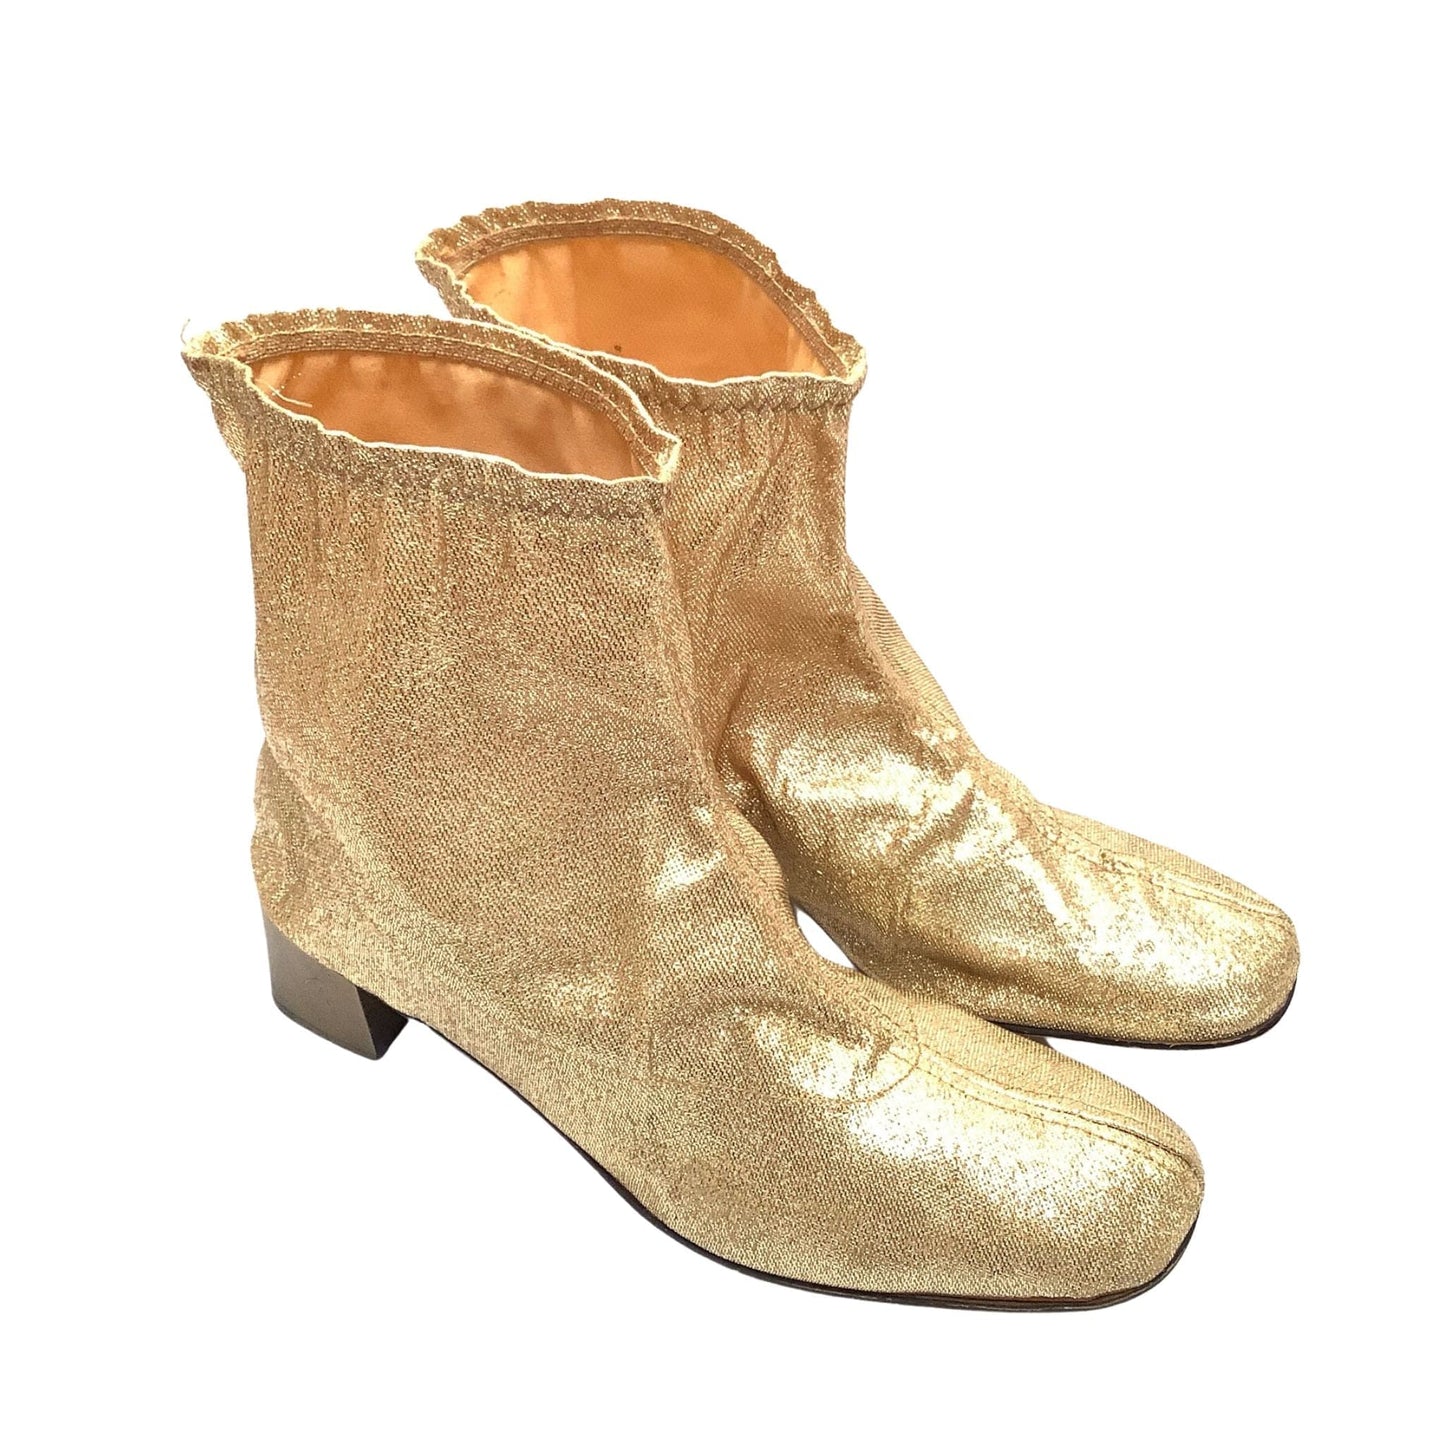 Vintage Gold Lame Booties 9 / Gold / Vintage 1960s